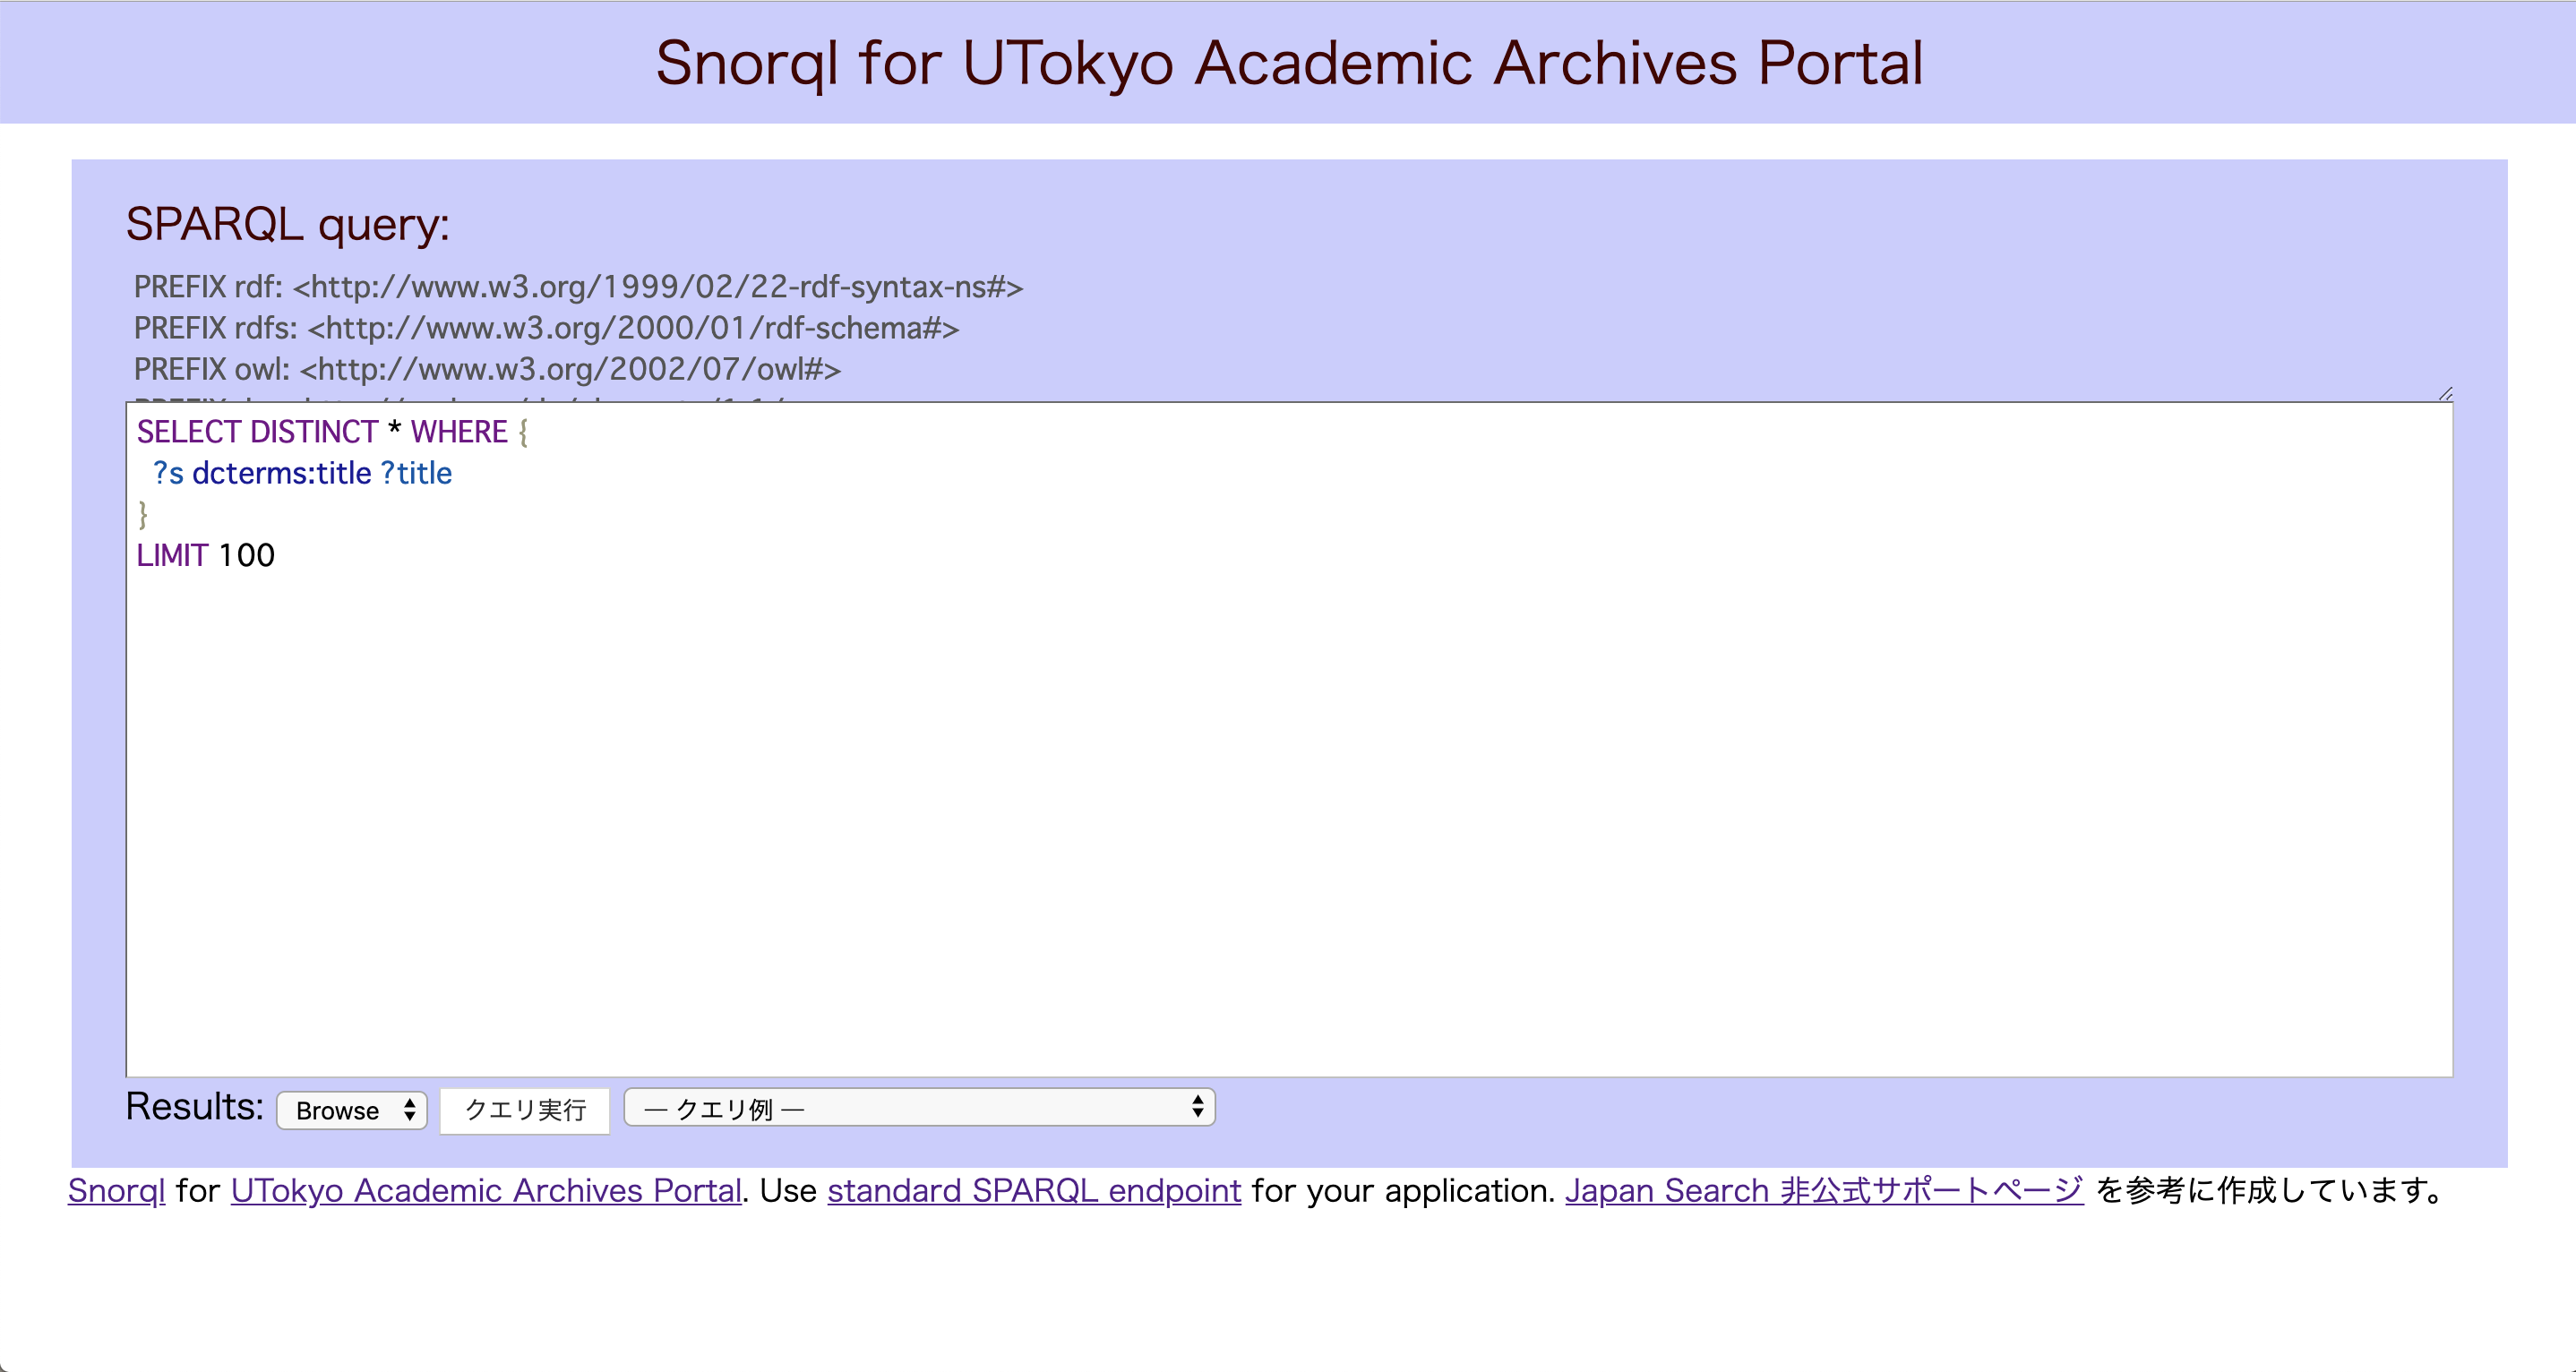 Snorql for UTokyo Academic Archives Portal